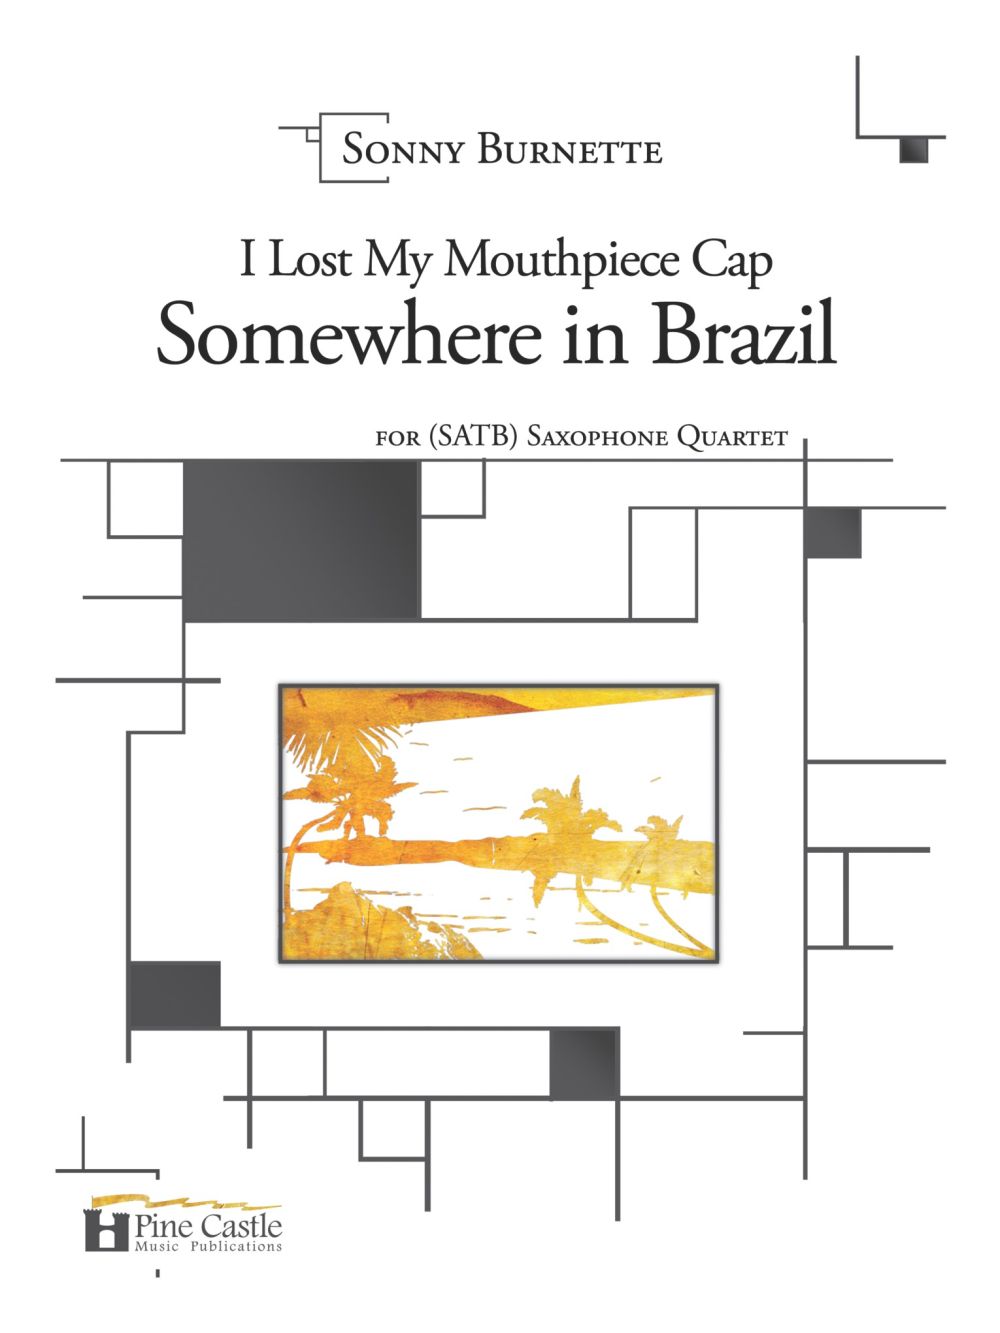 I Lost My Mouthpiece Cap Somewhere In Brazil (BURNETTE SONNY)